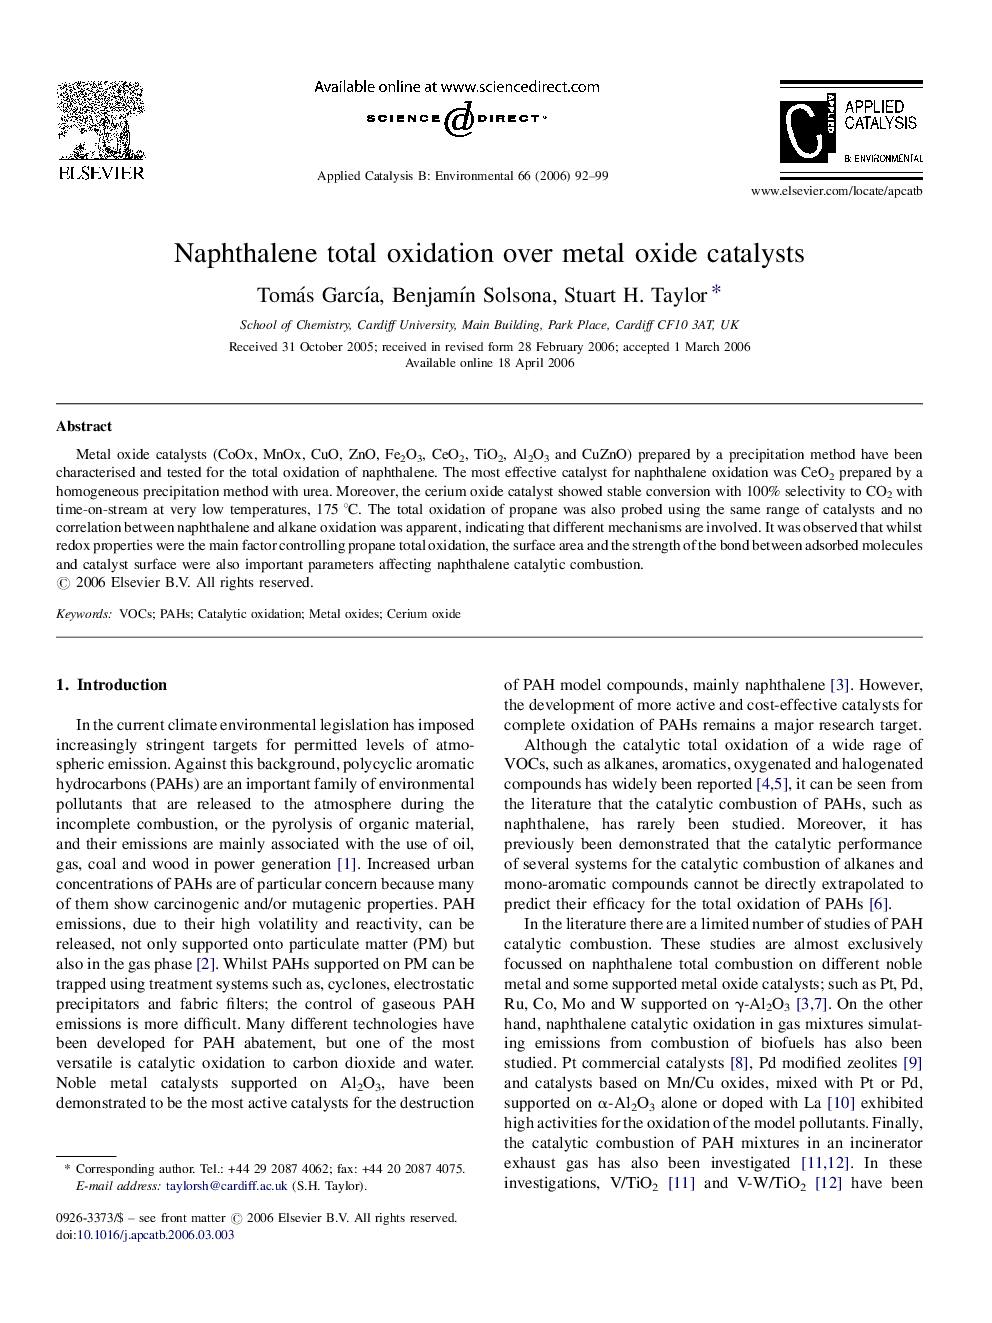 Naphthalene total oxidation over metal oxide catalysts